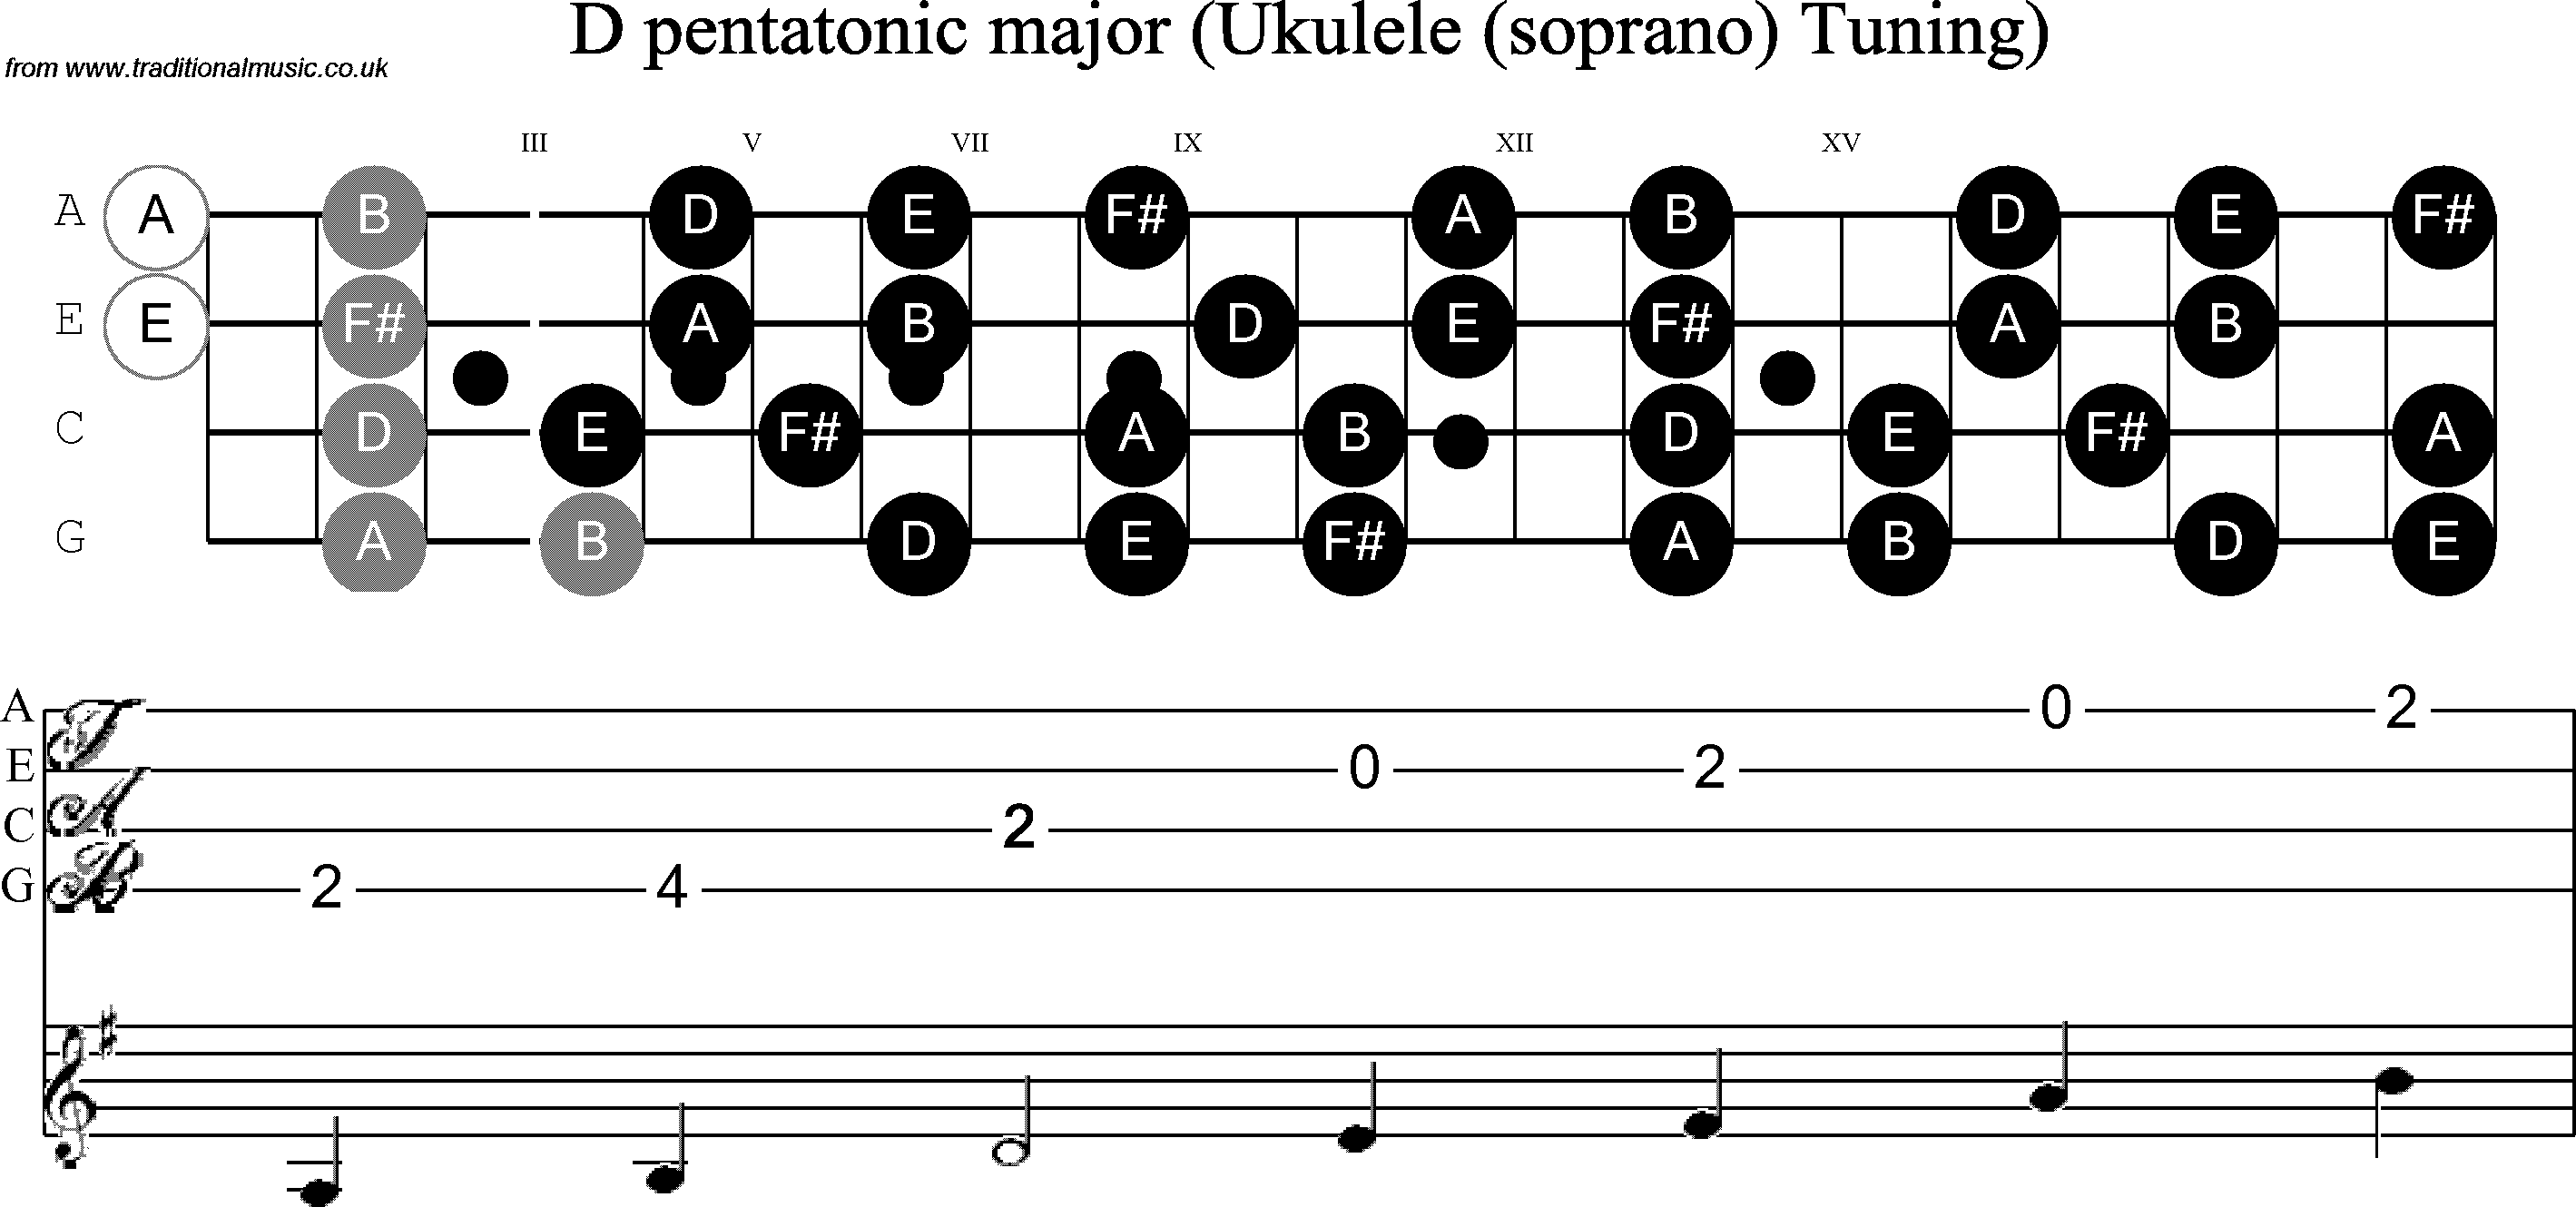 Scale, stave and neck diagram for Ukulele D Pentatonic